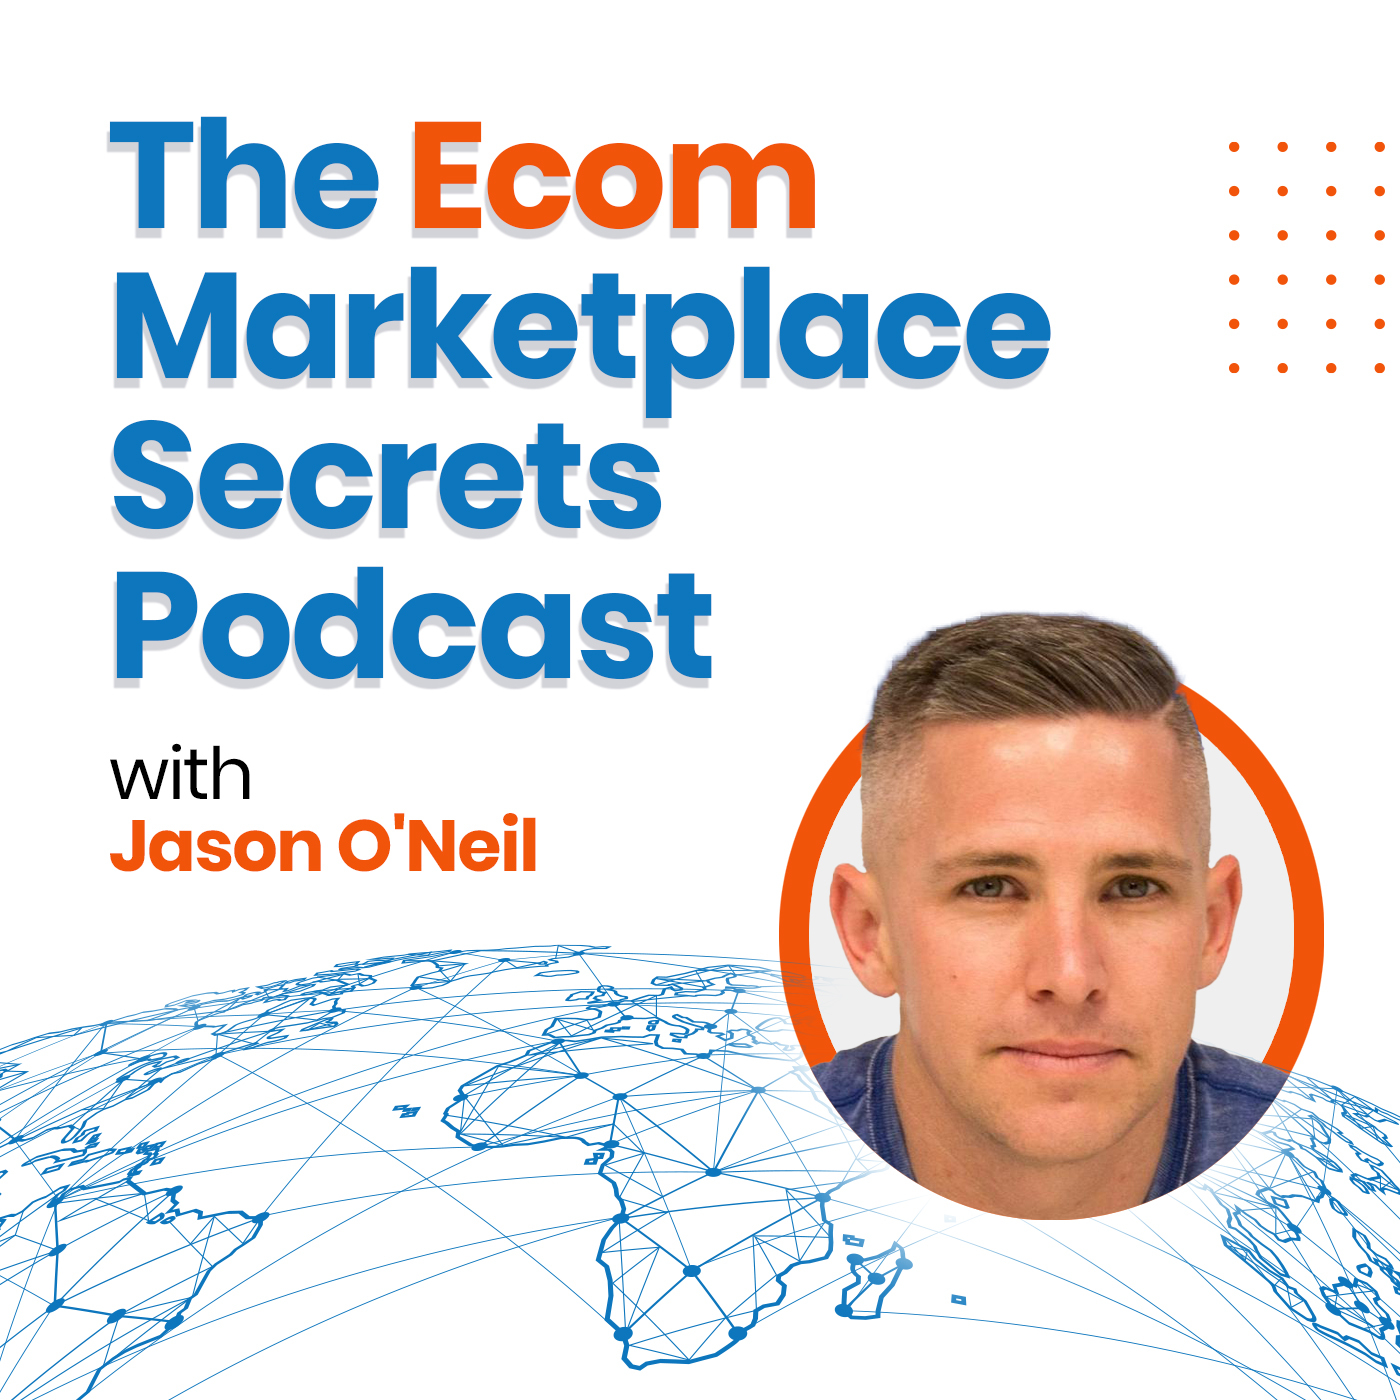 The Ecom Marketplace Secrets